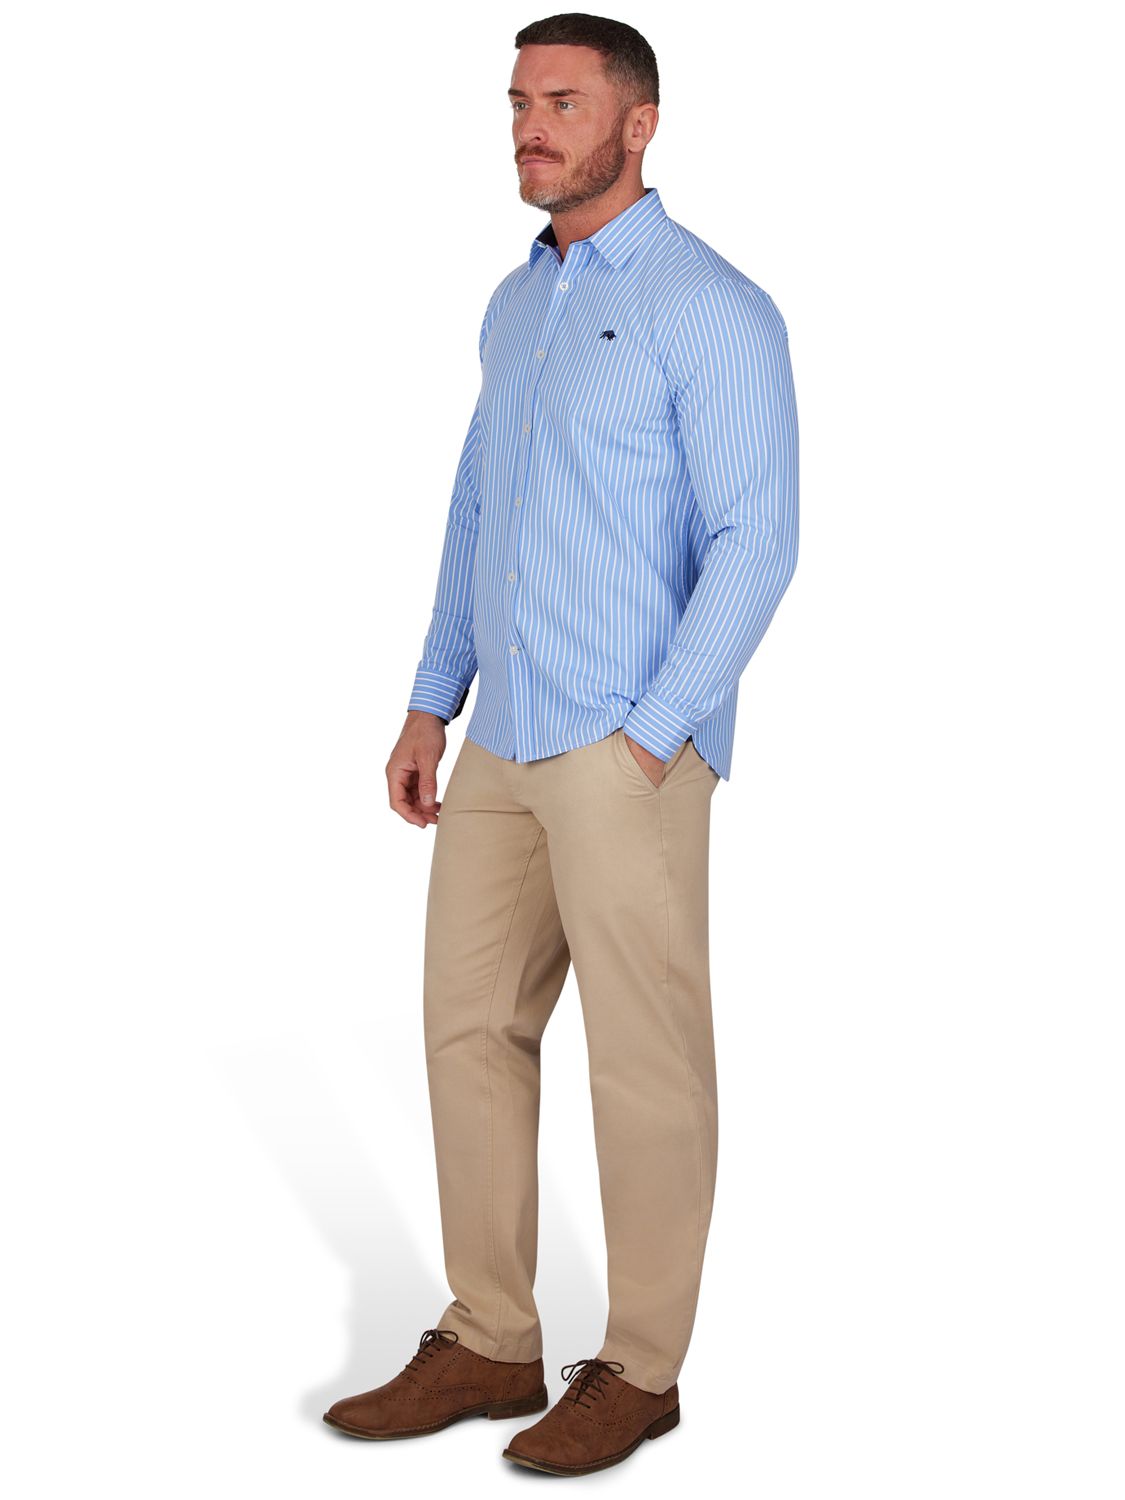 Raging Bull Classic Long Sleeve Stripe Shirt, Blue/White, L